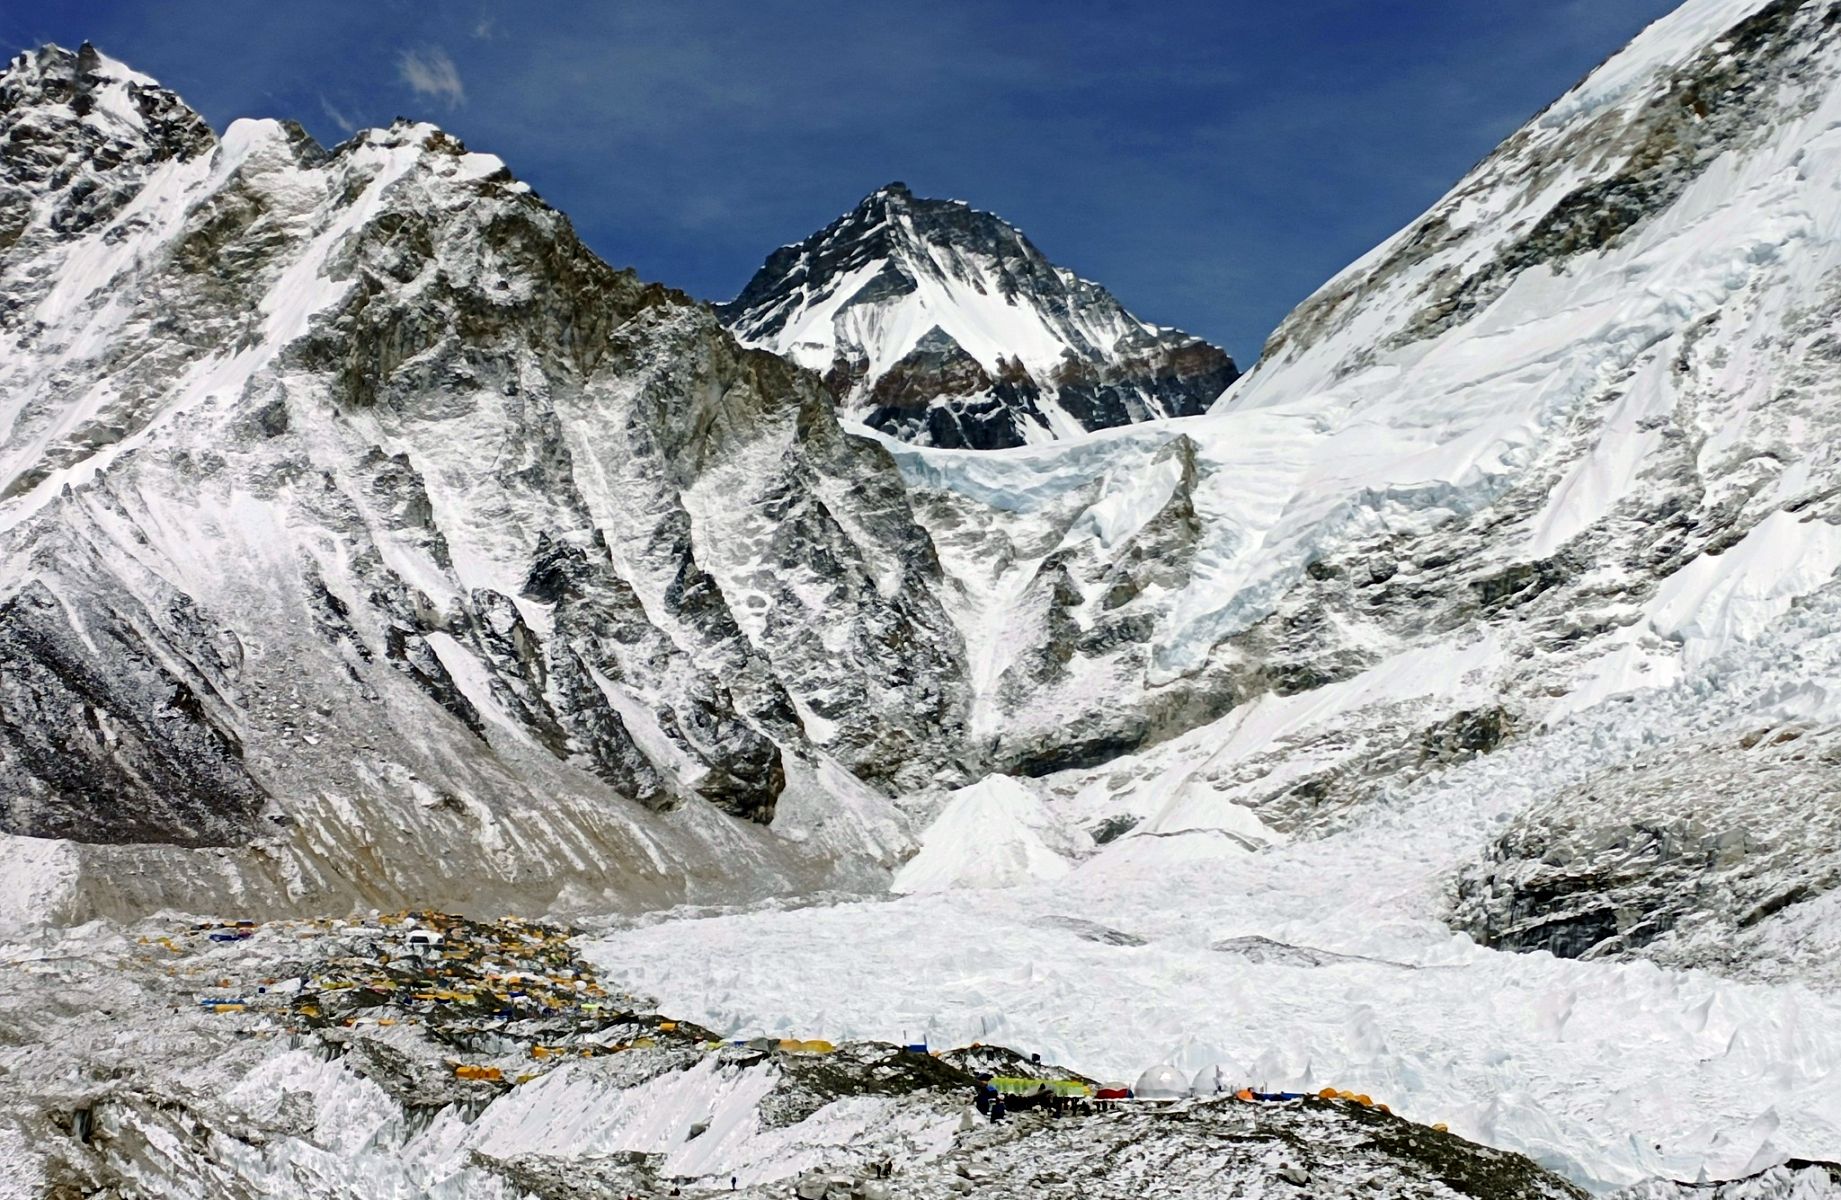 Lho La beyond Everest BC